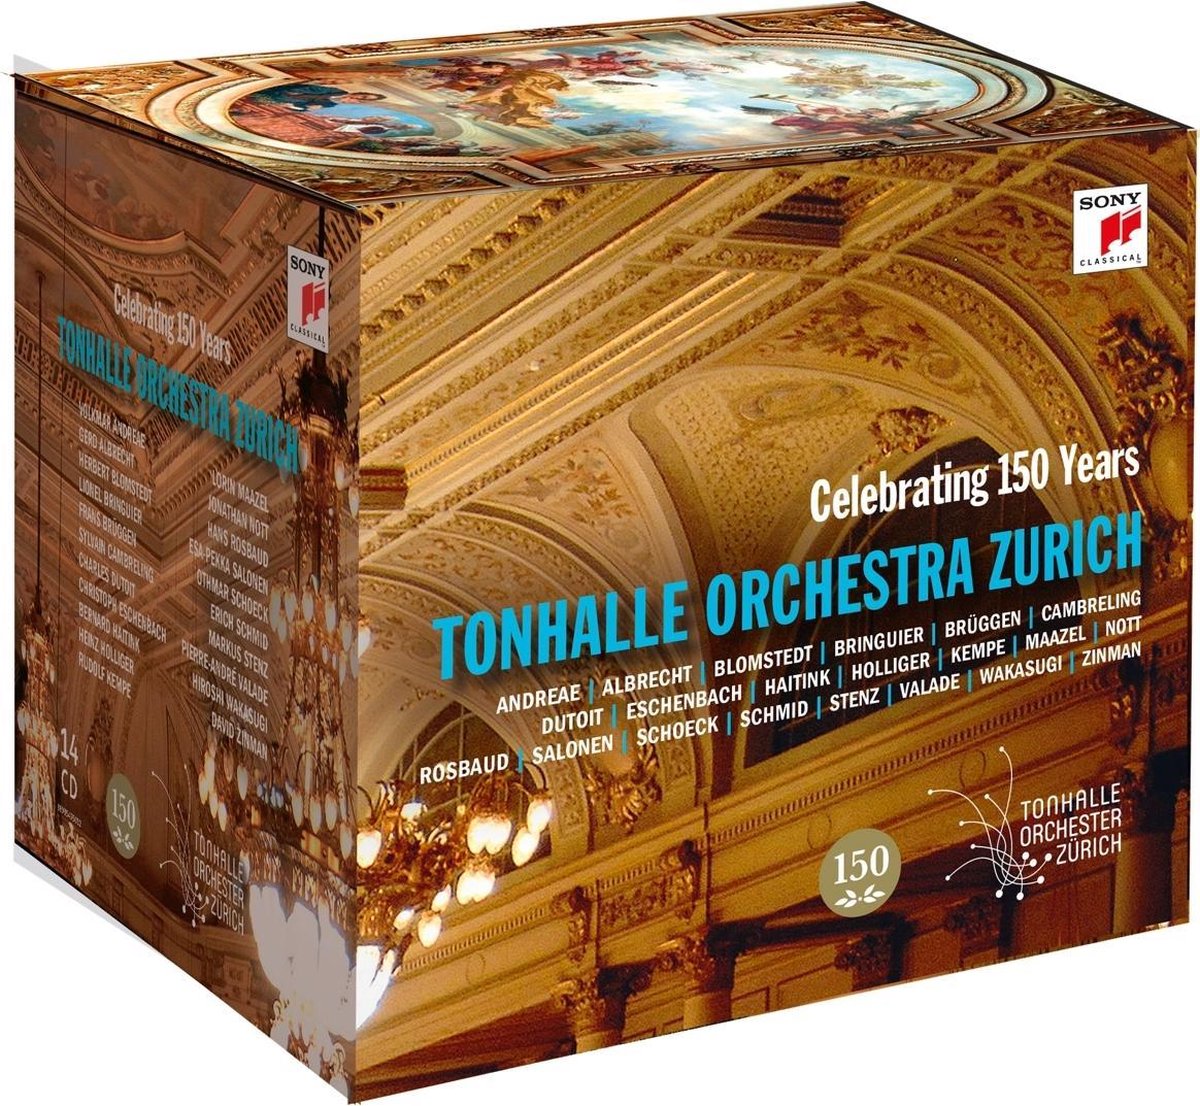 Tonhalle-Orchester Zurich - Celebrating 150 Years | Tonhalle-Orchester Zurich